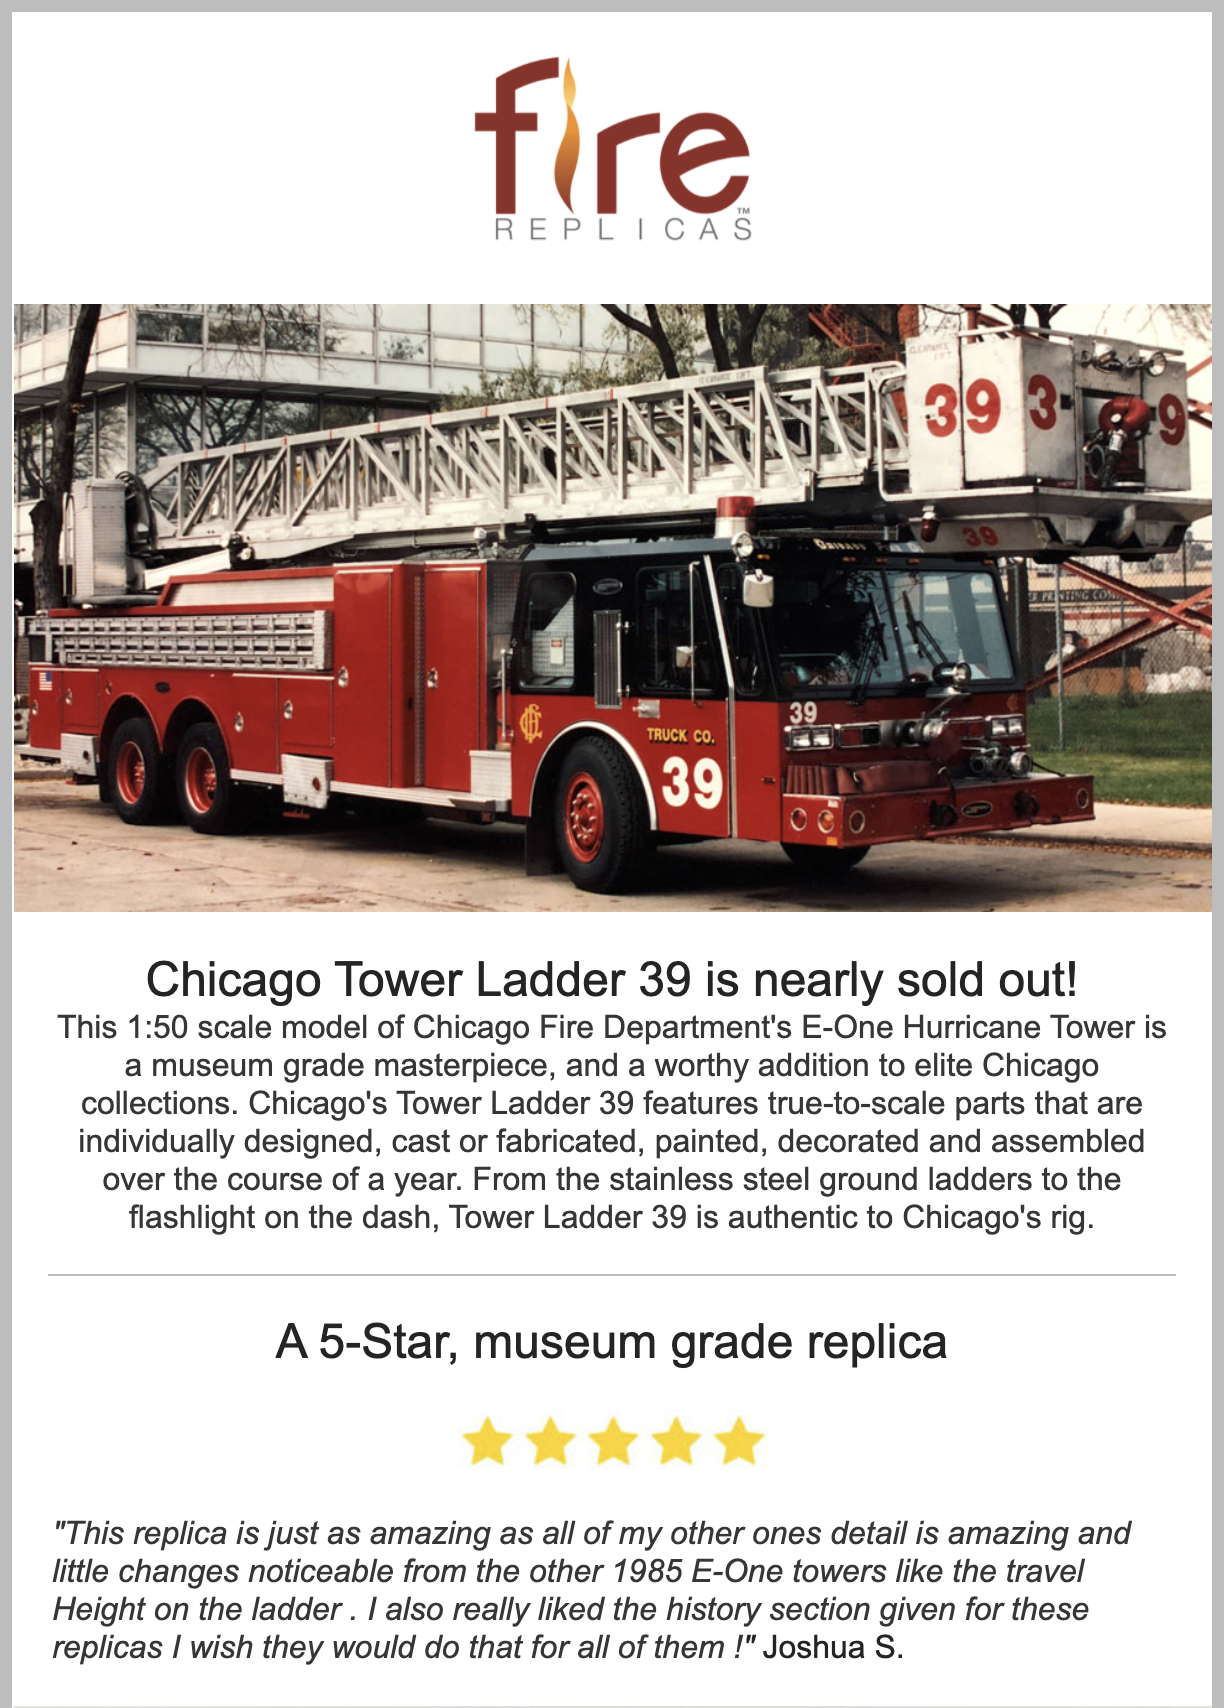 Chicago Fire Department replica models